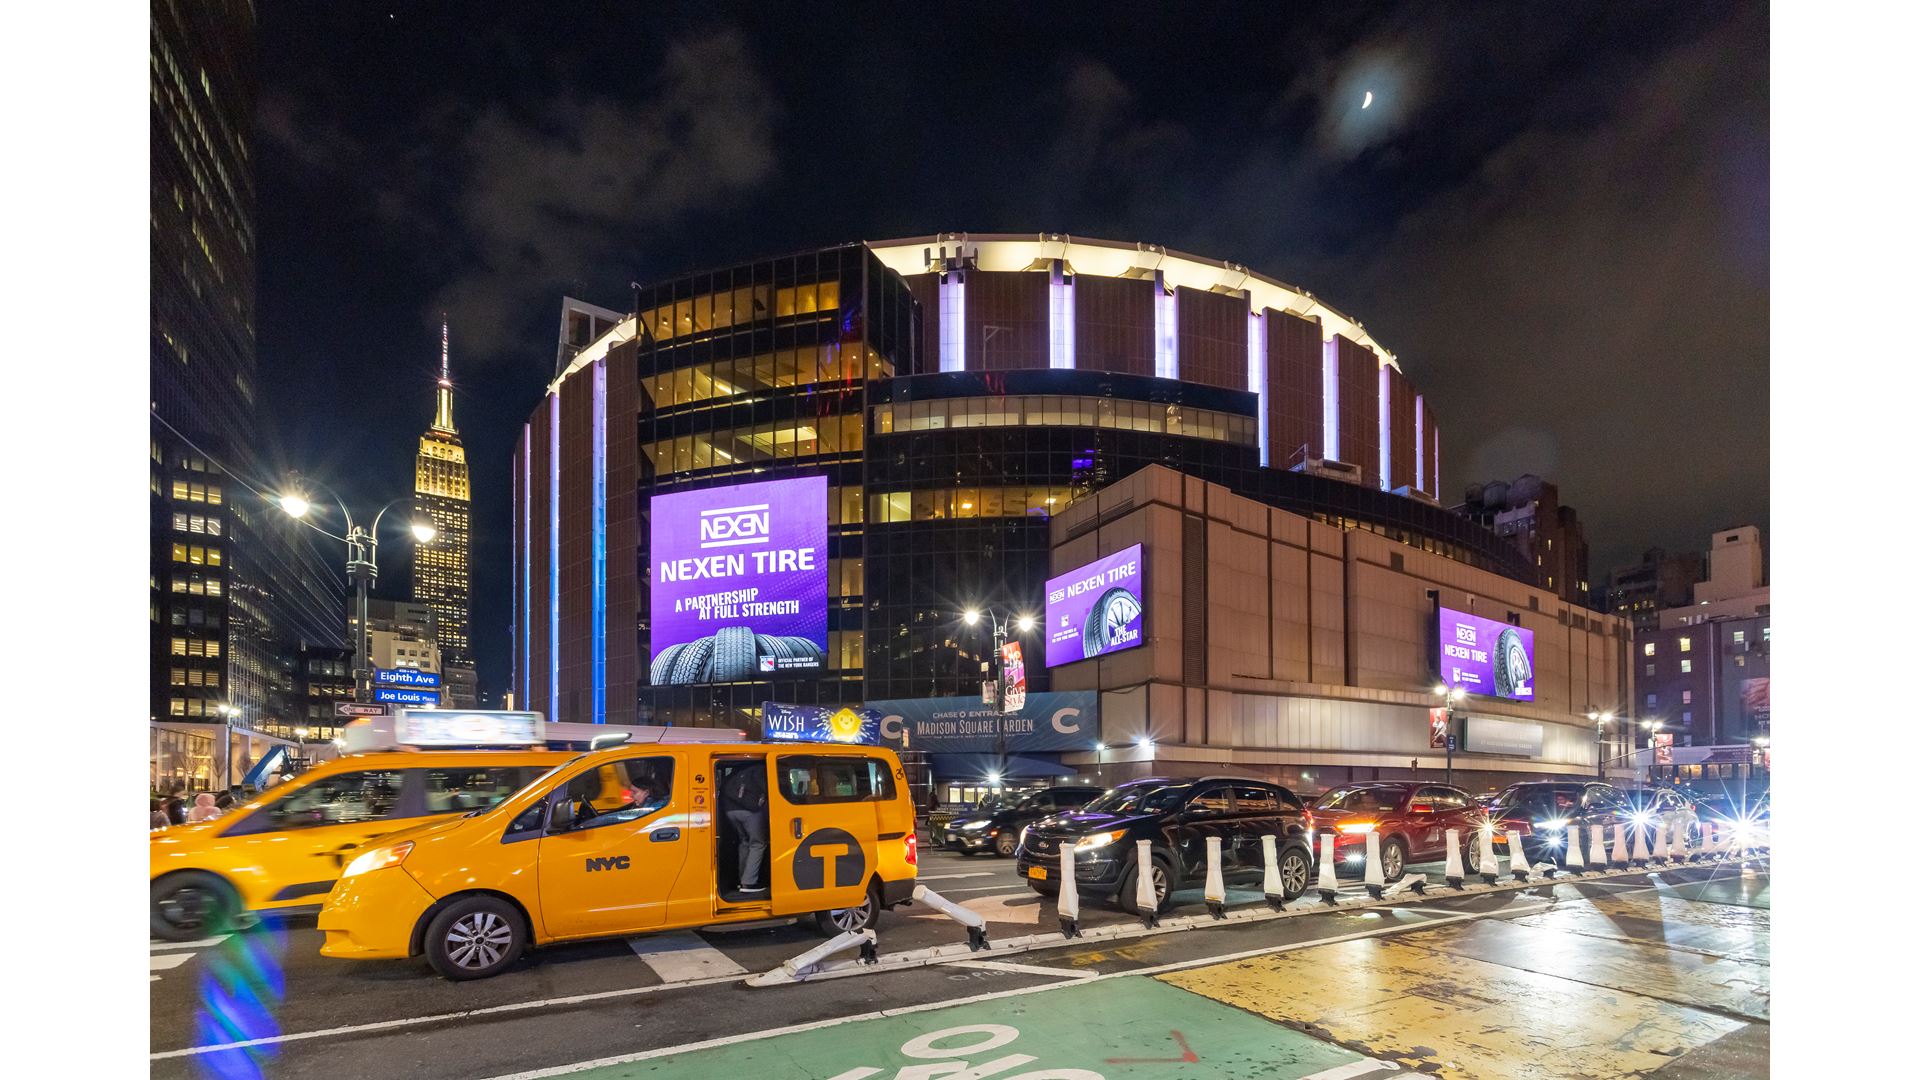 NEXEN TIRE launches Madison Square Garden advertisement